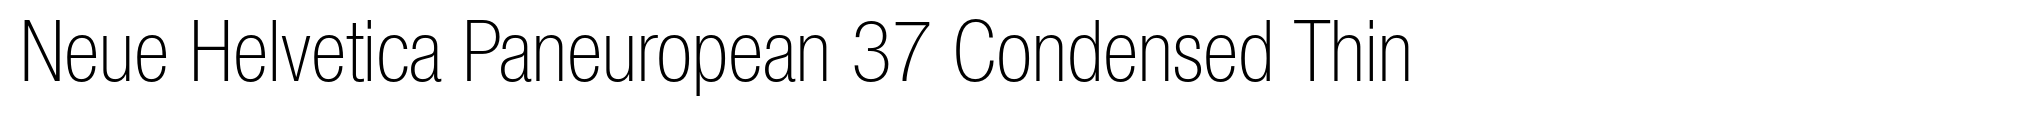 Neue Helvetica Paneuropean 37 Condensed Thin image